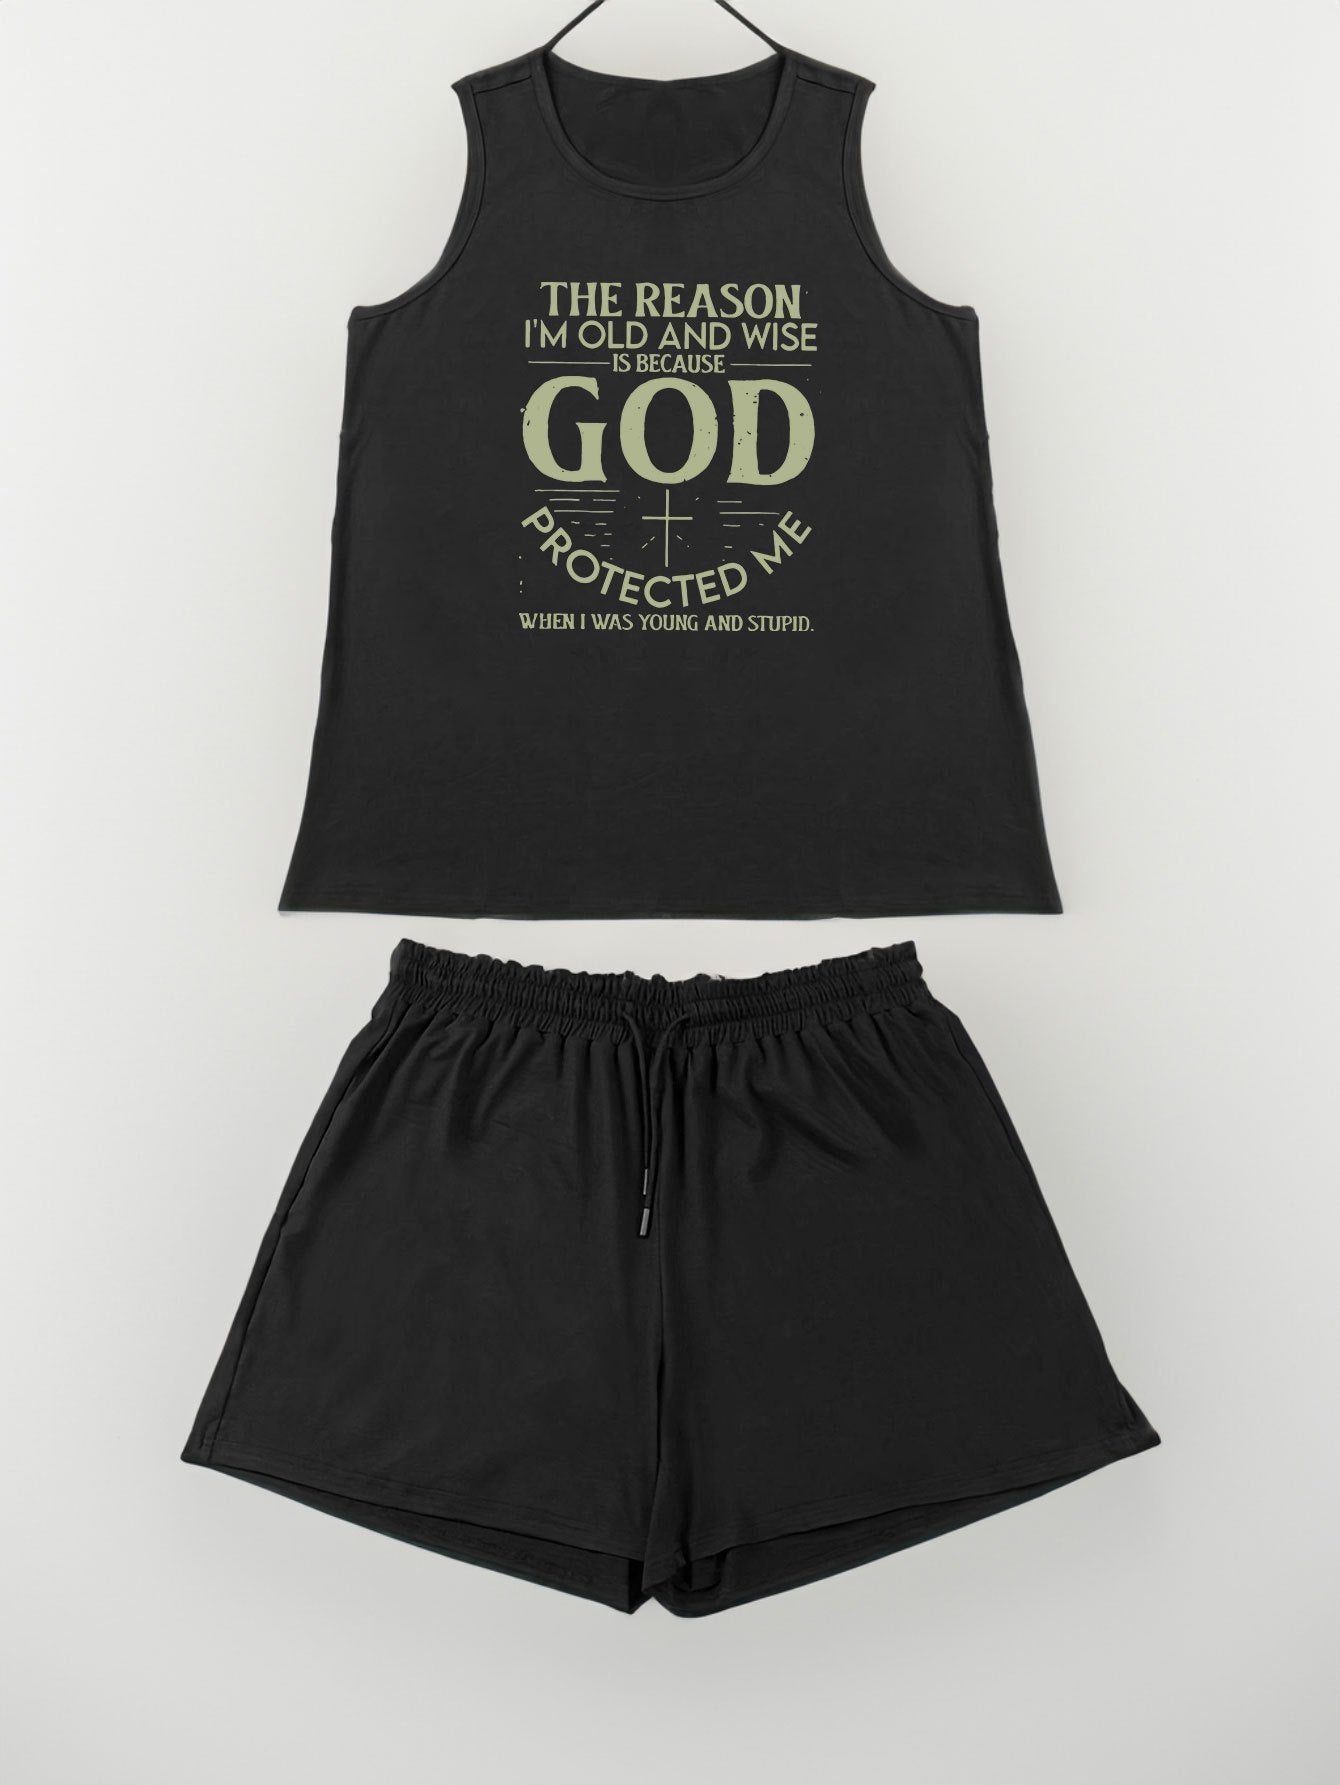 God Protected Me  Women's Christian Pajama Set claimedbygoddesigns